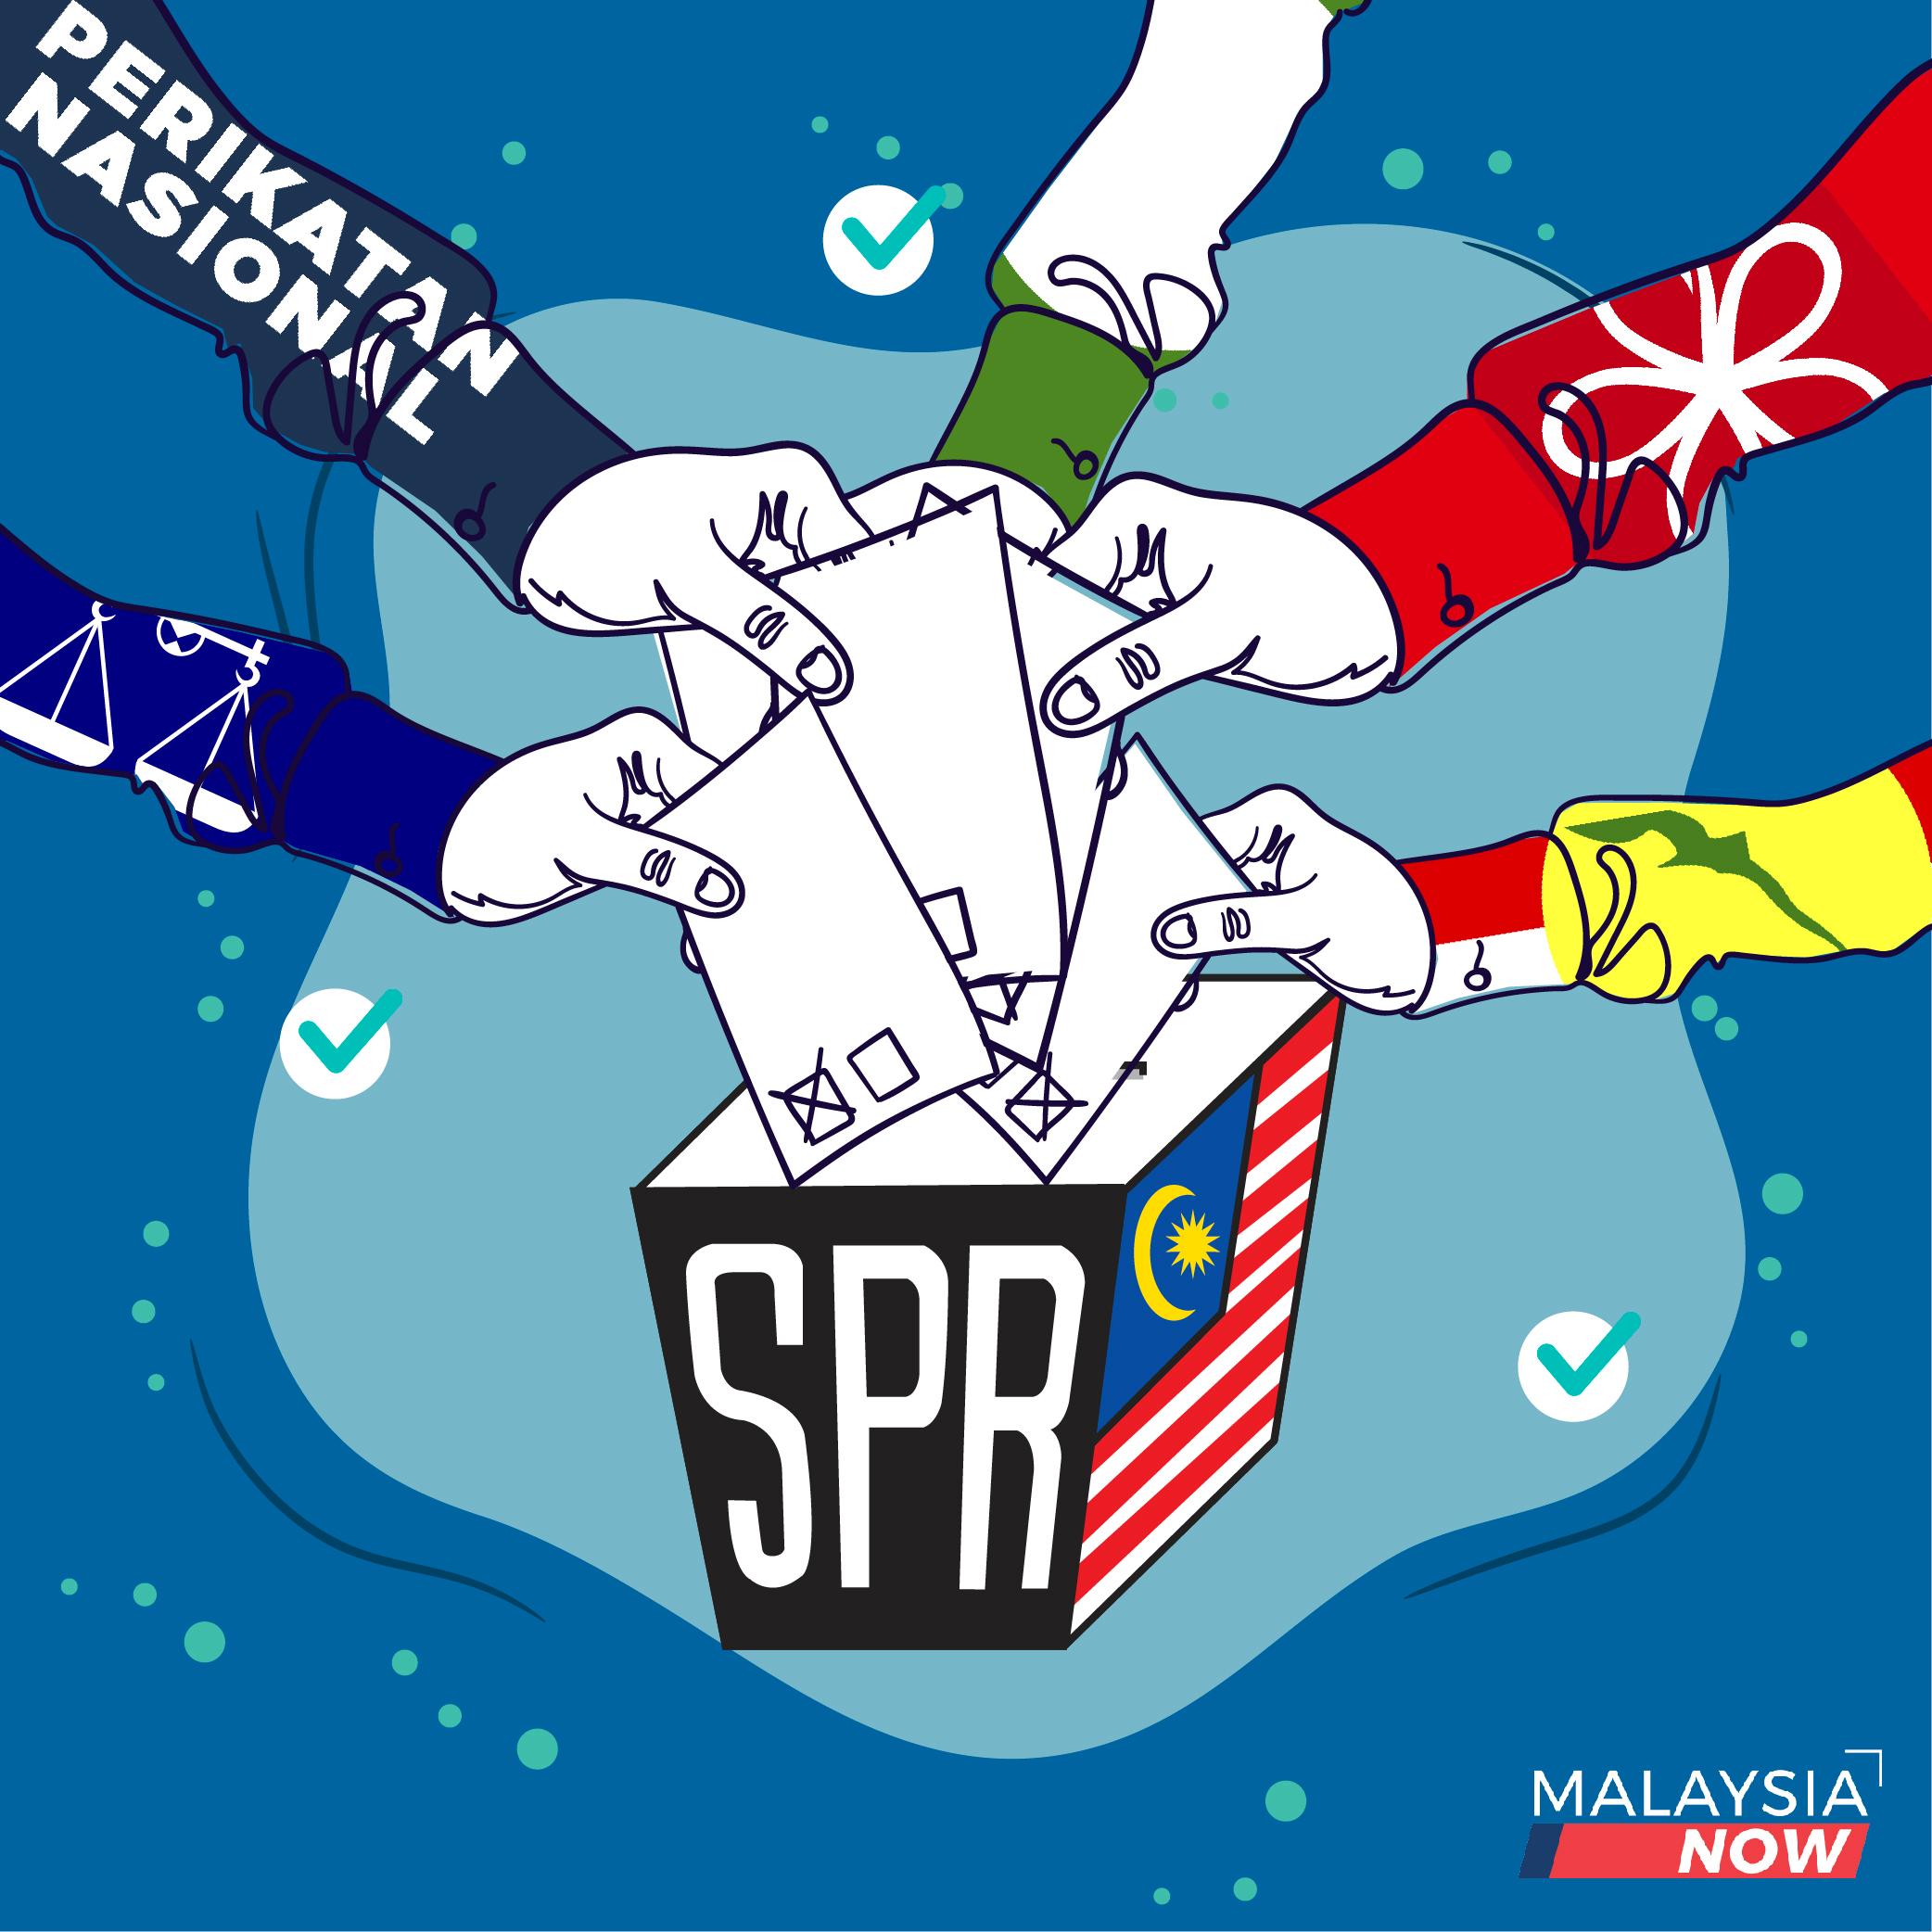 05-Malay-Based-Party-PRU-01